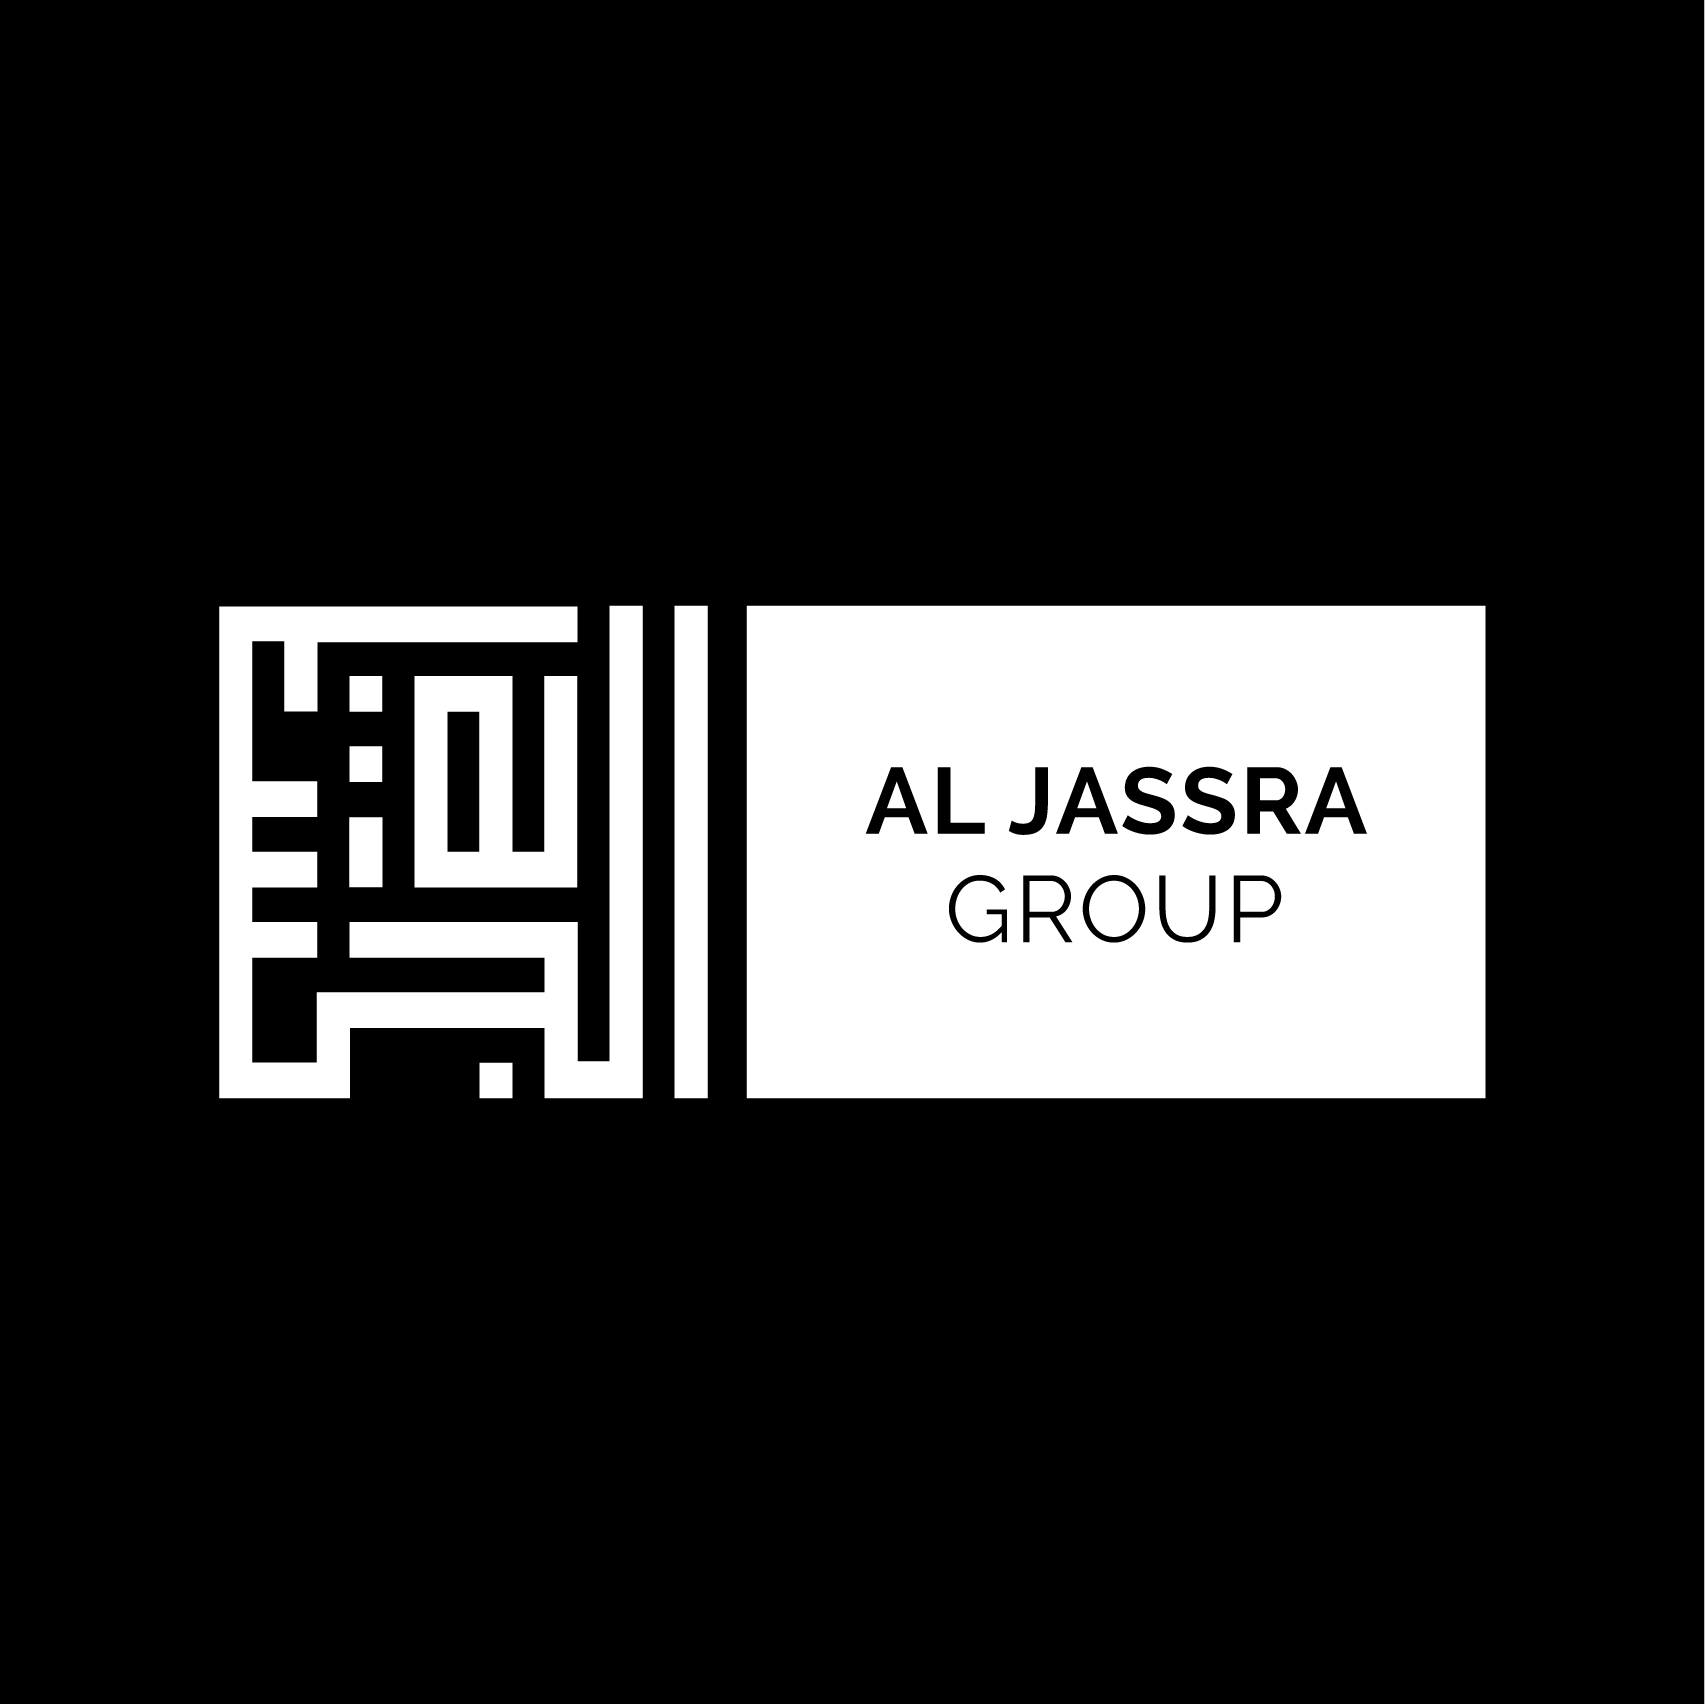 Club Image for AL JASSRA